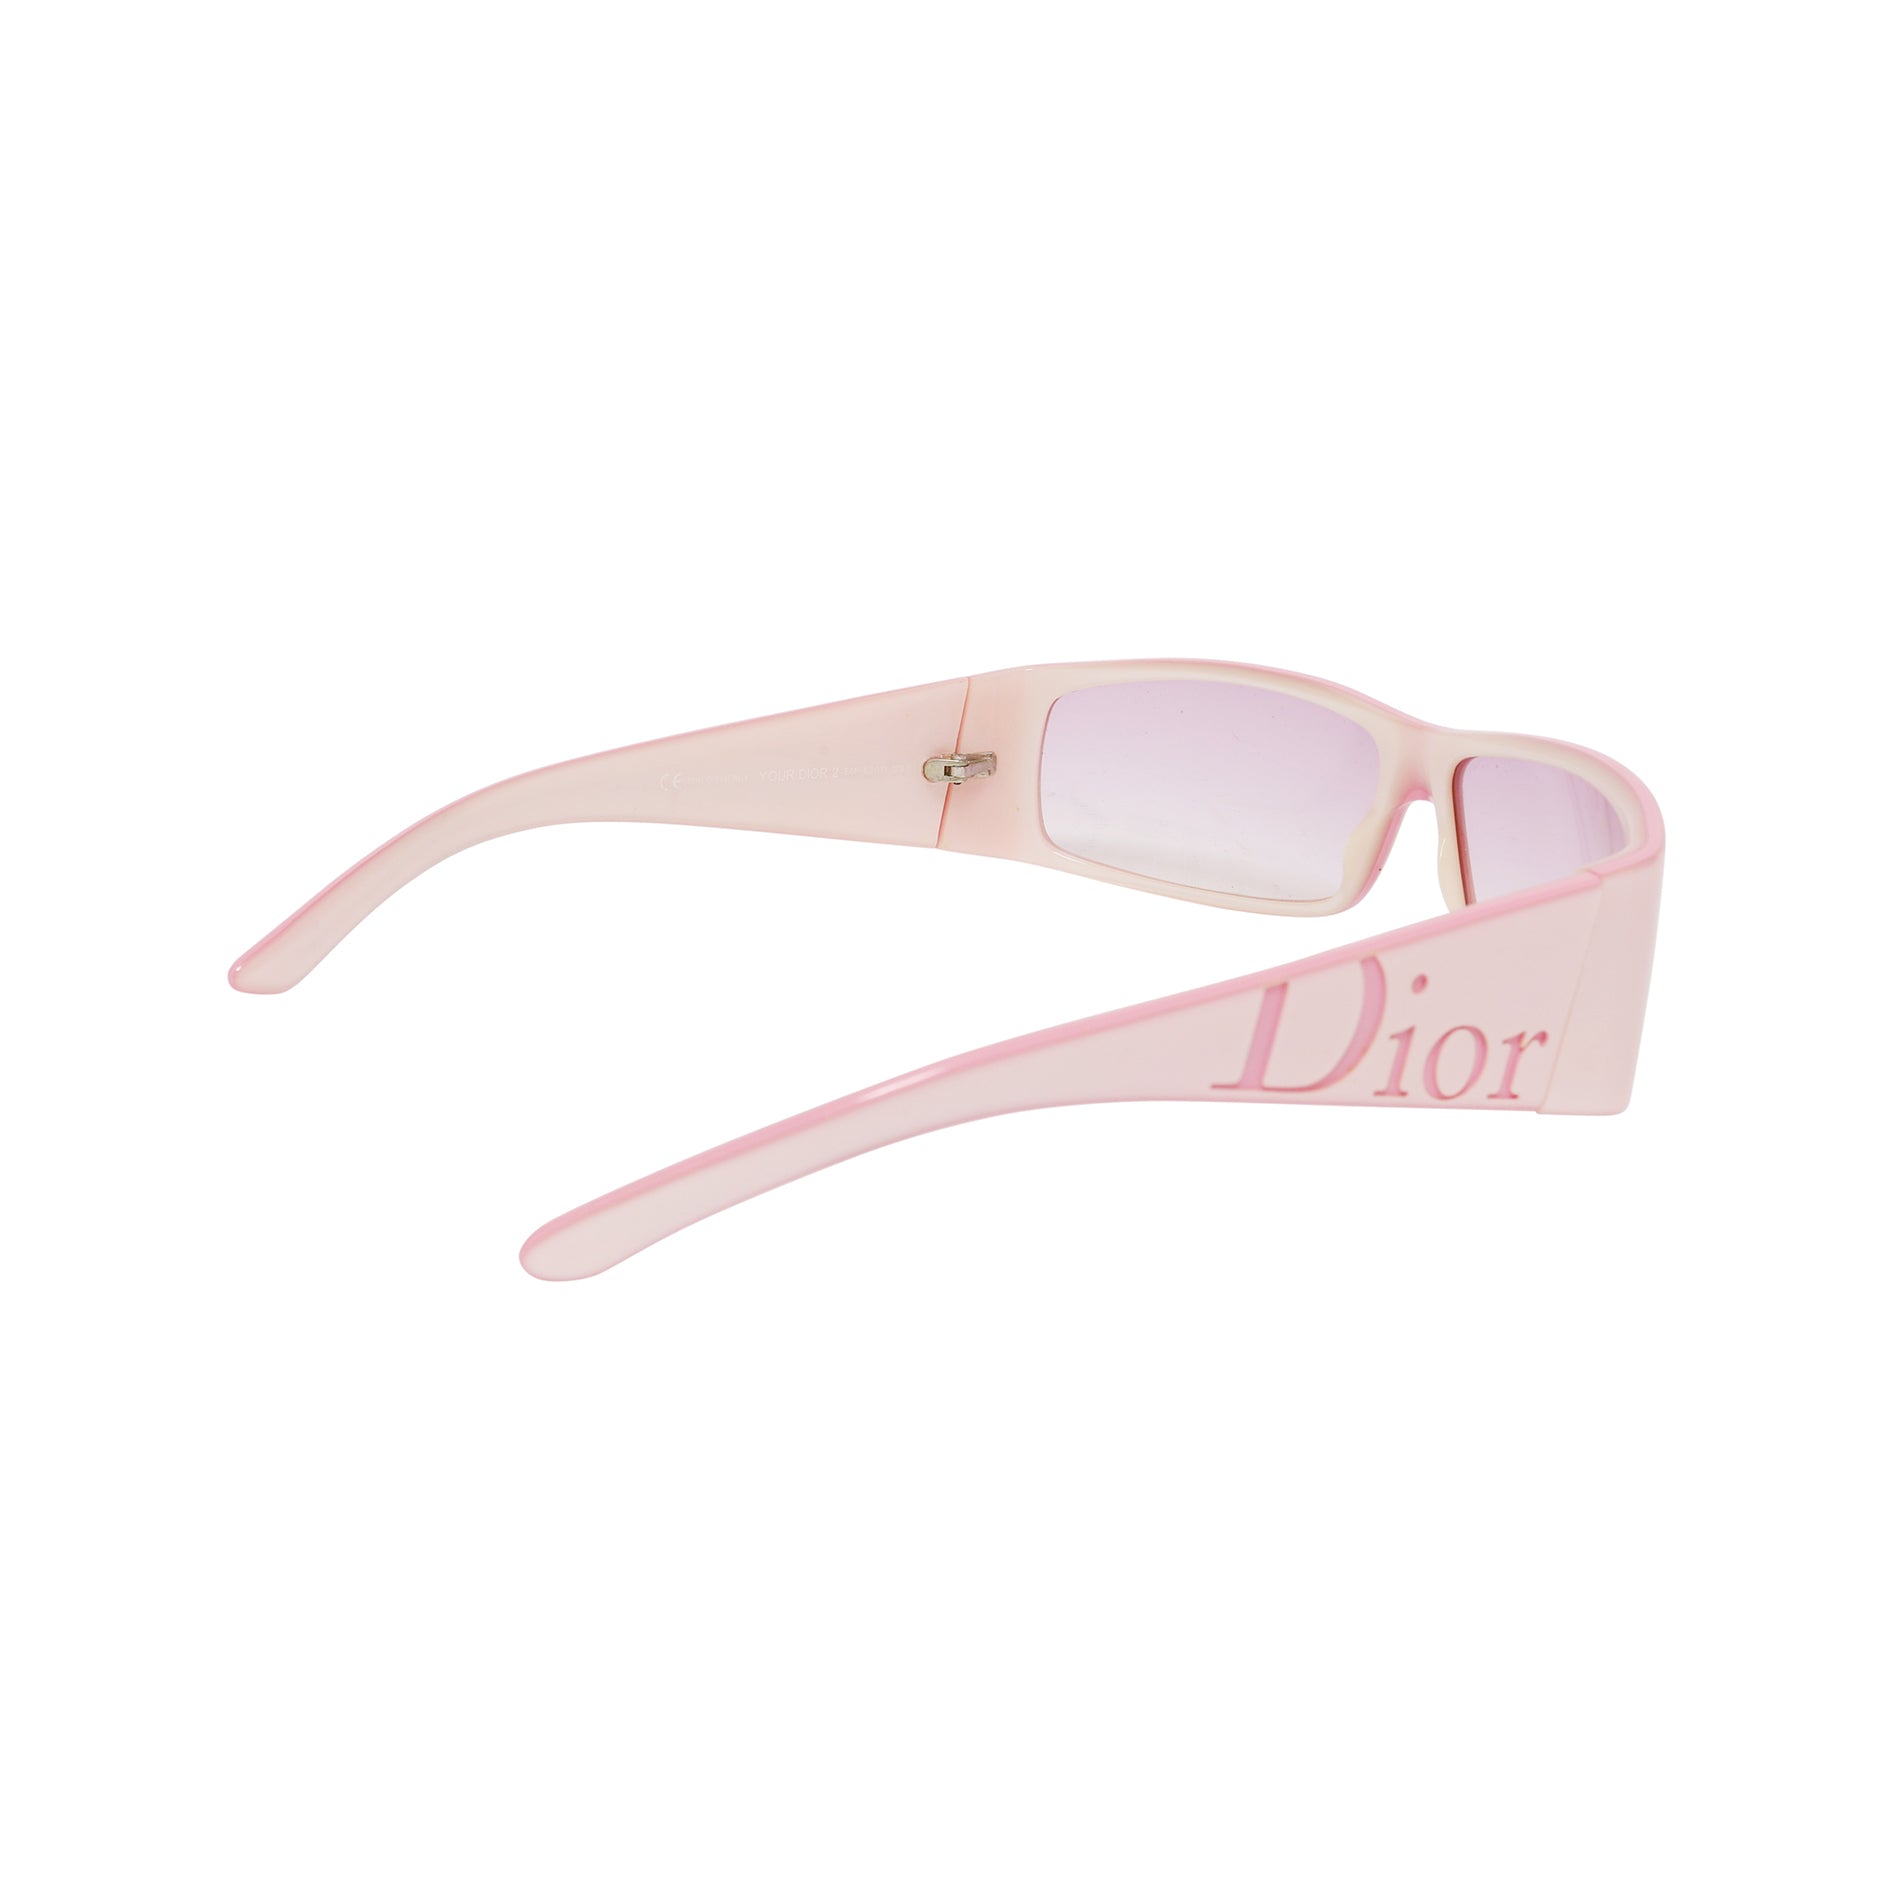 Christian Dior by John Galliano "Your Dior 2" Pink Logo Sunglasses